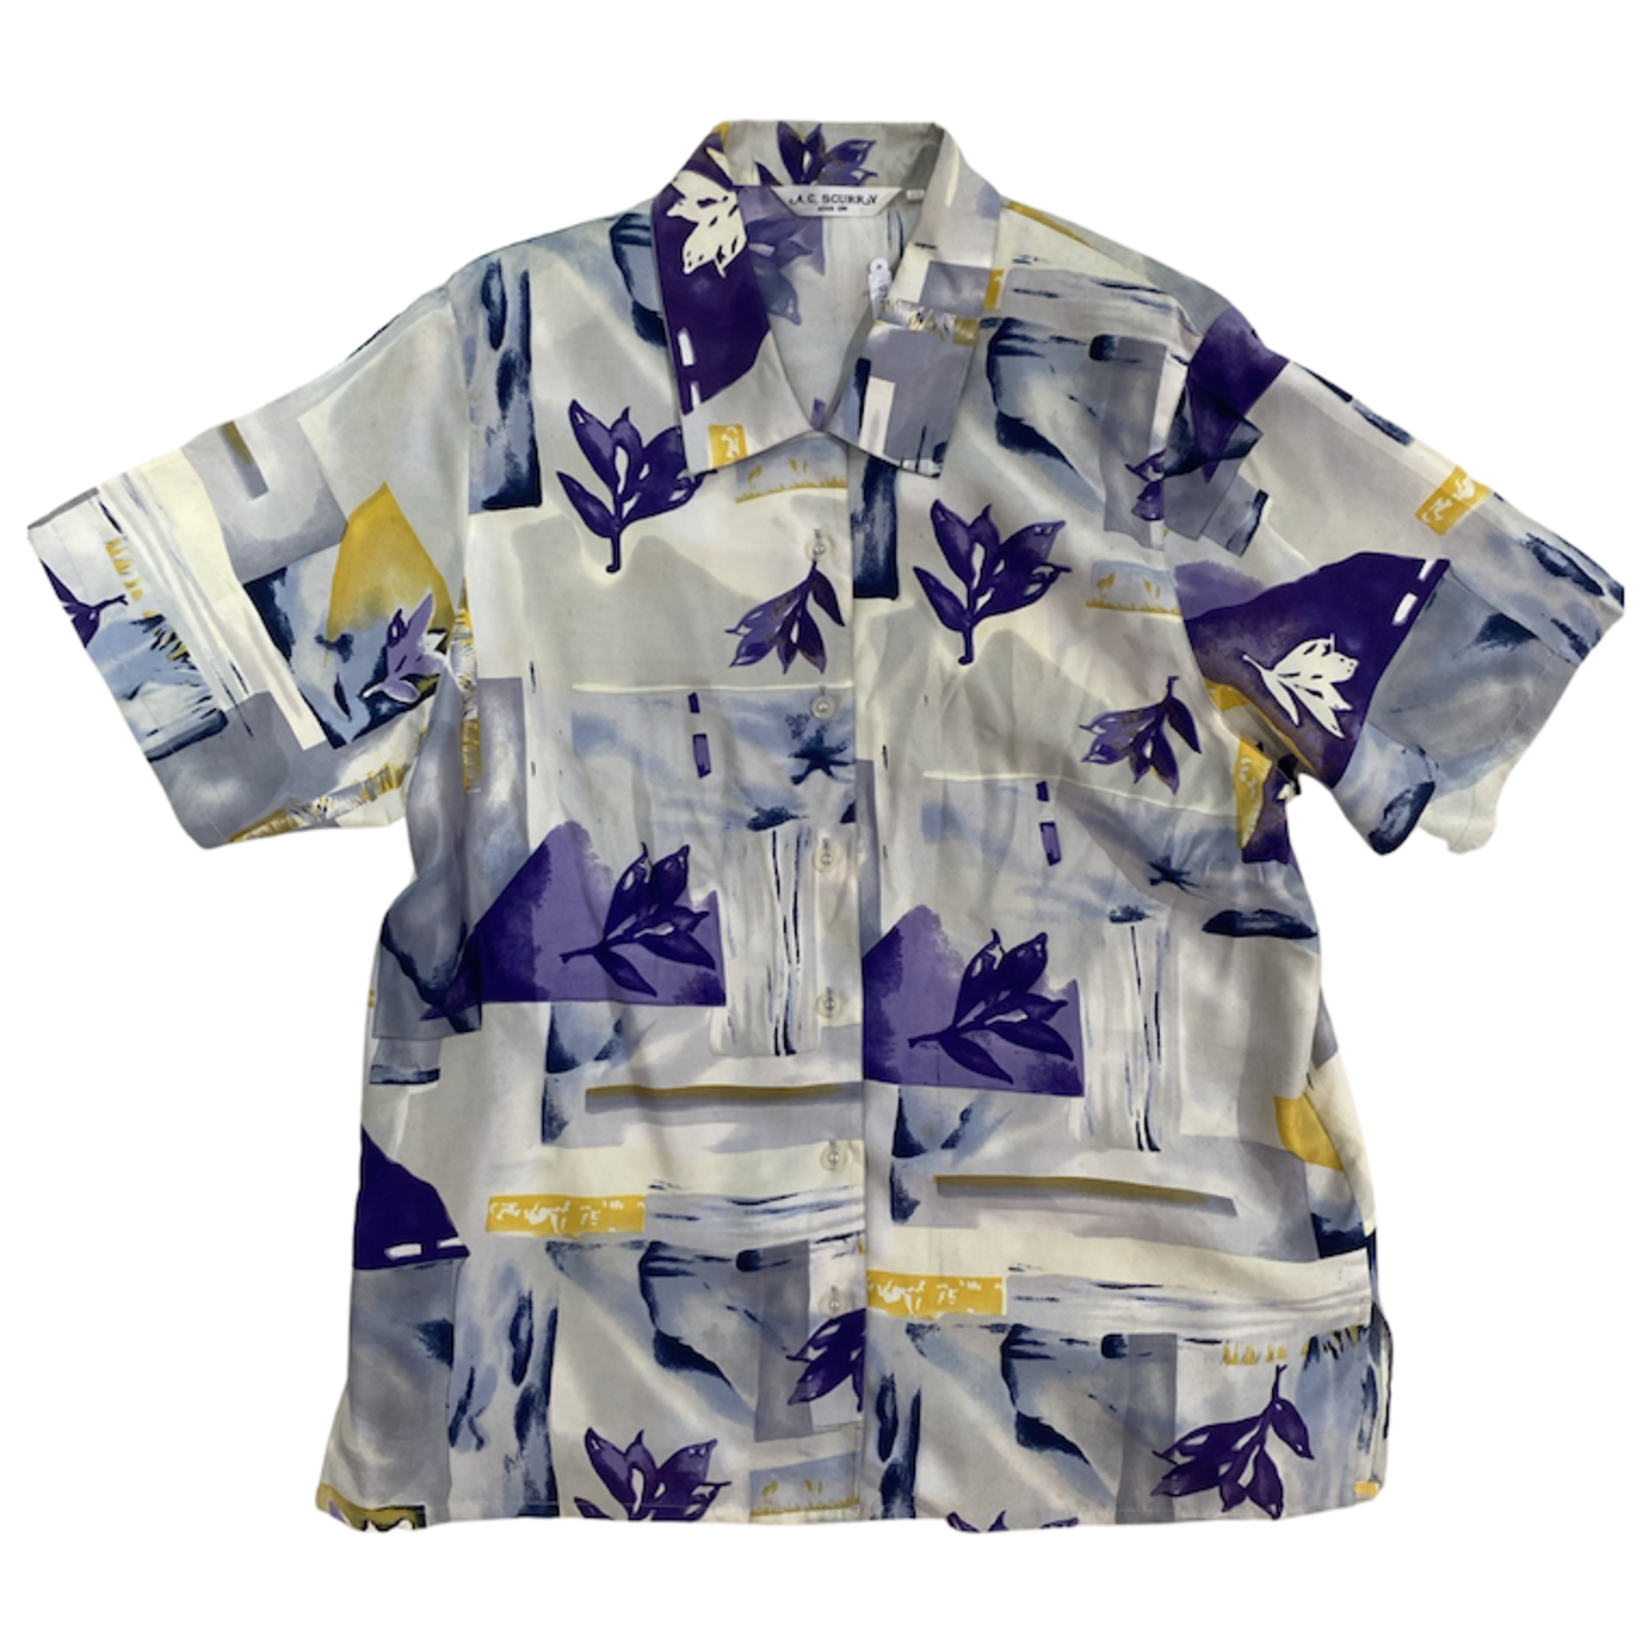 Vintage Vintage pattern blouse size M/L